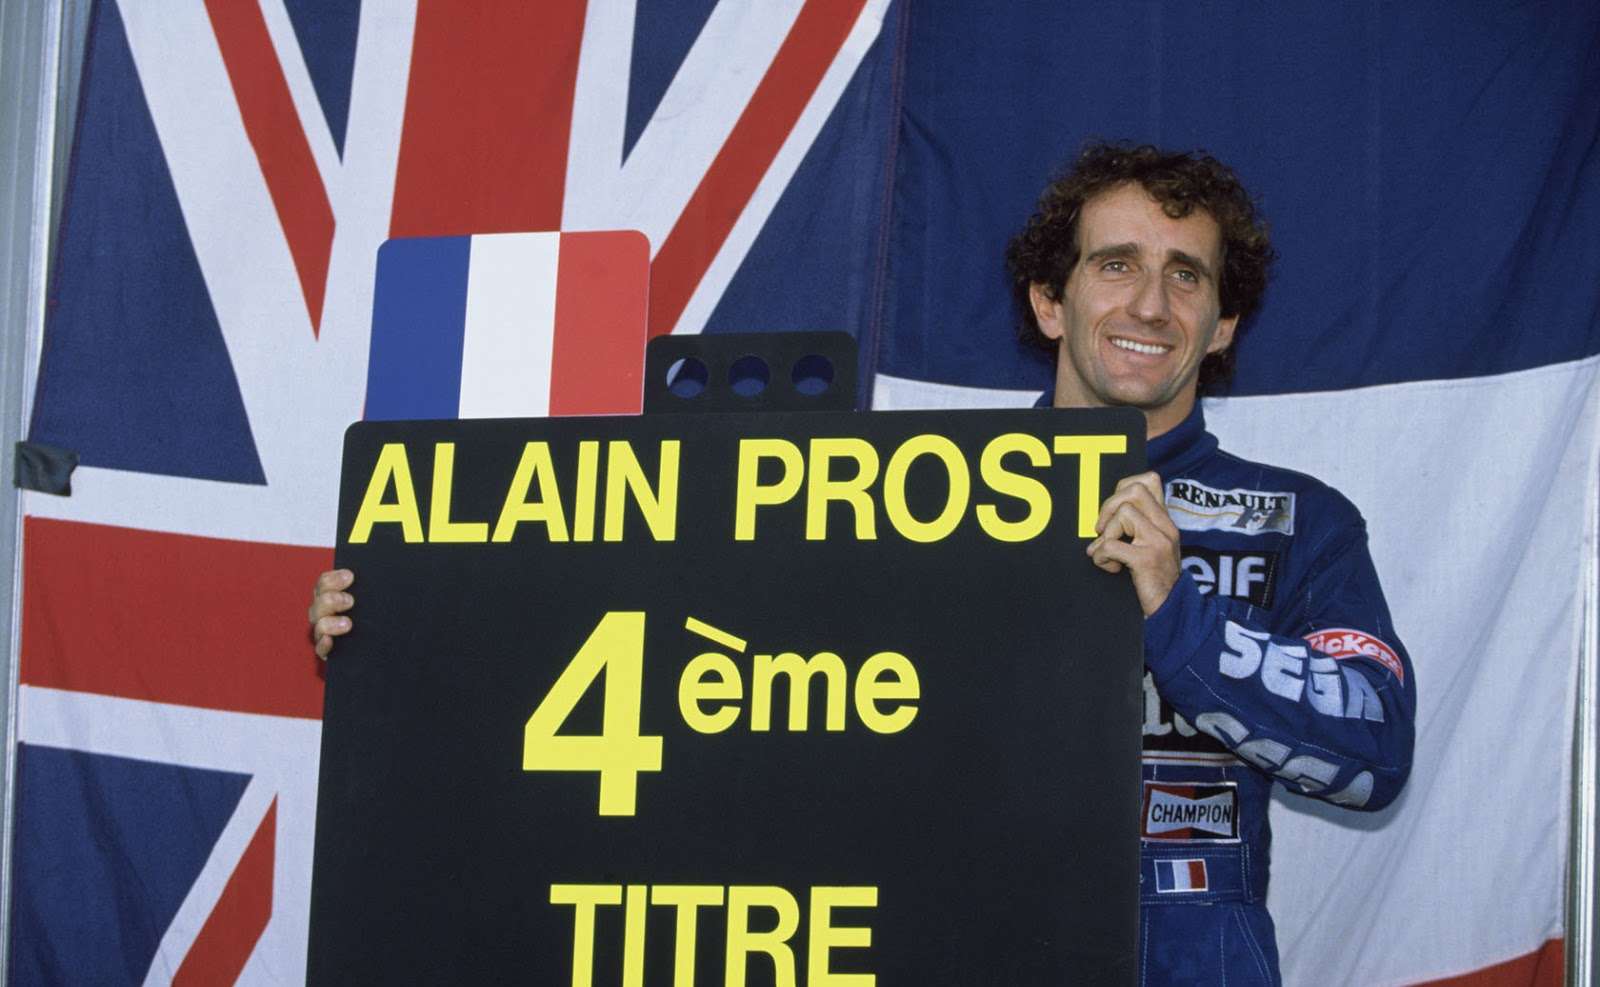 Alain Prost - quatro títulos (1985, 1986, 1989 e 1993)